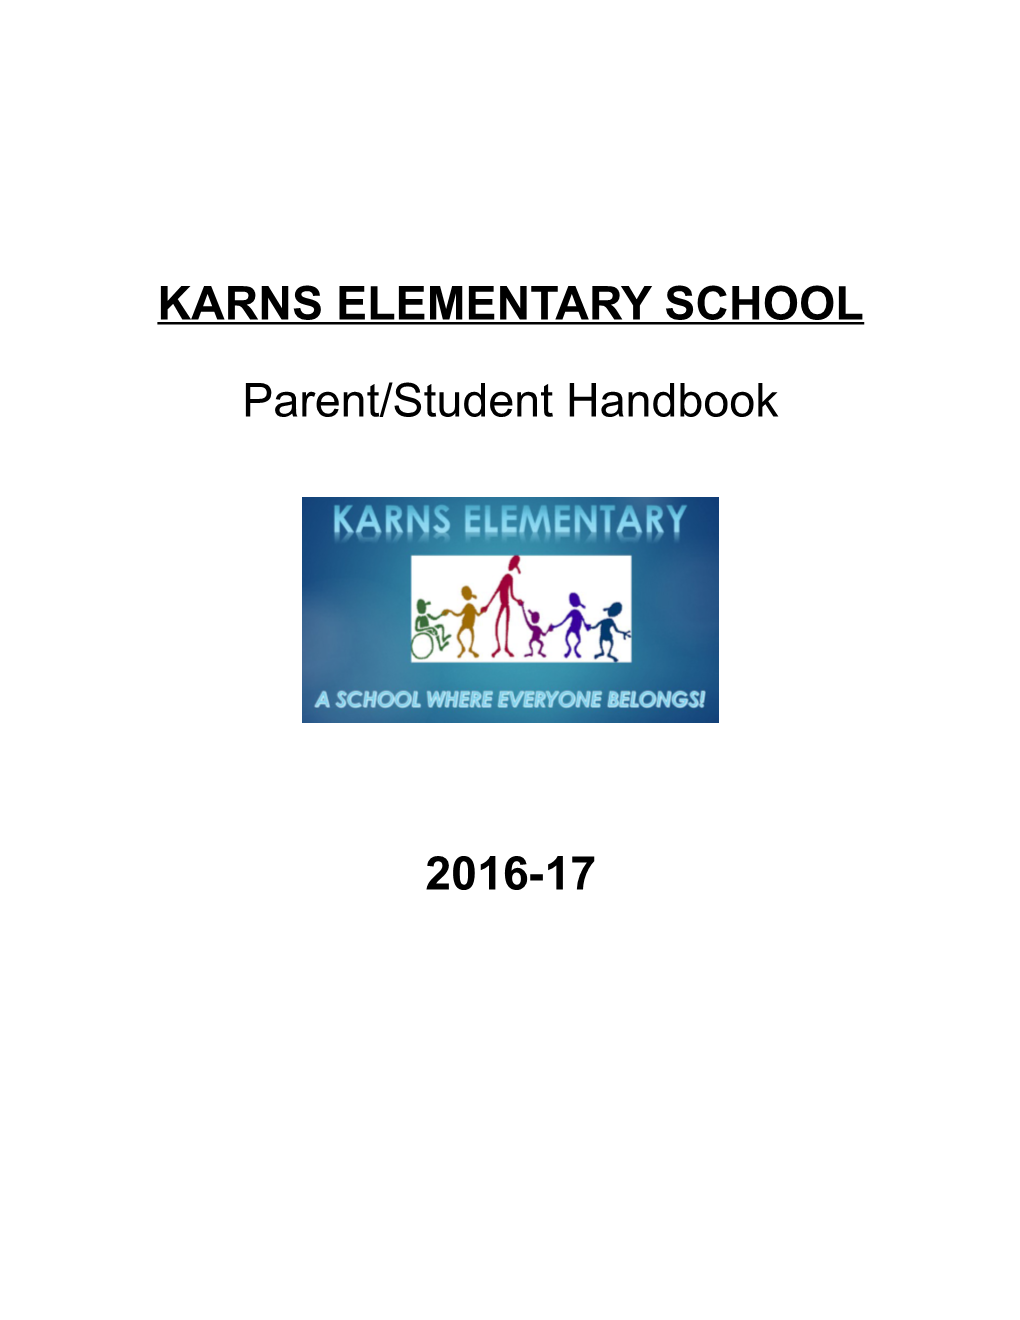 Karns Elementary School